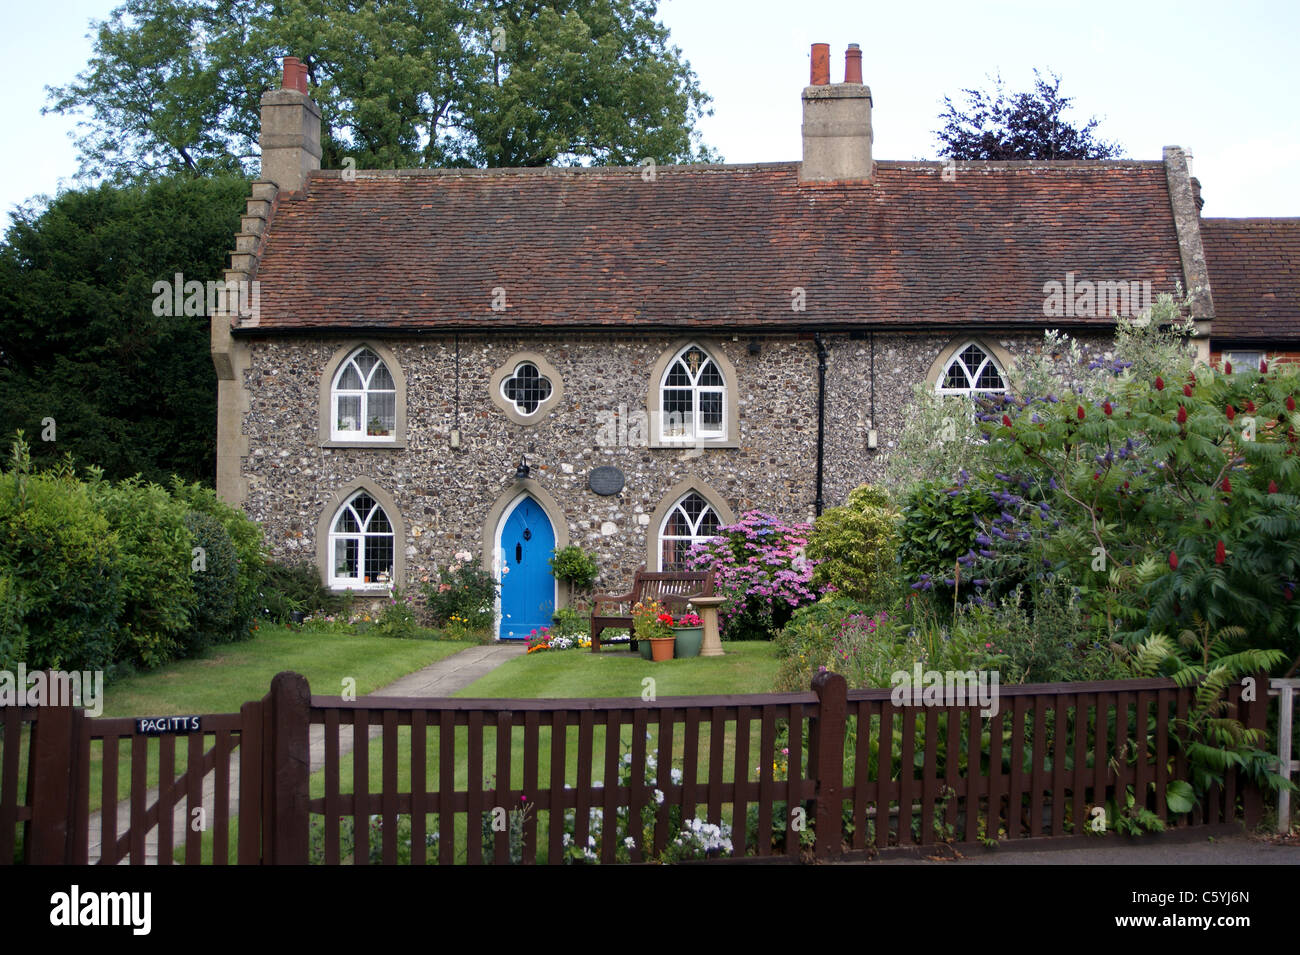 Pagitt's almshouses, Monken Hadley, Hertfordshire, England Stock Photo